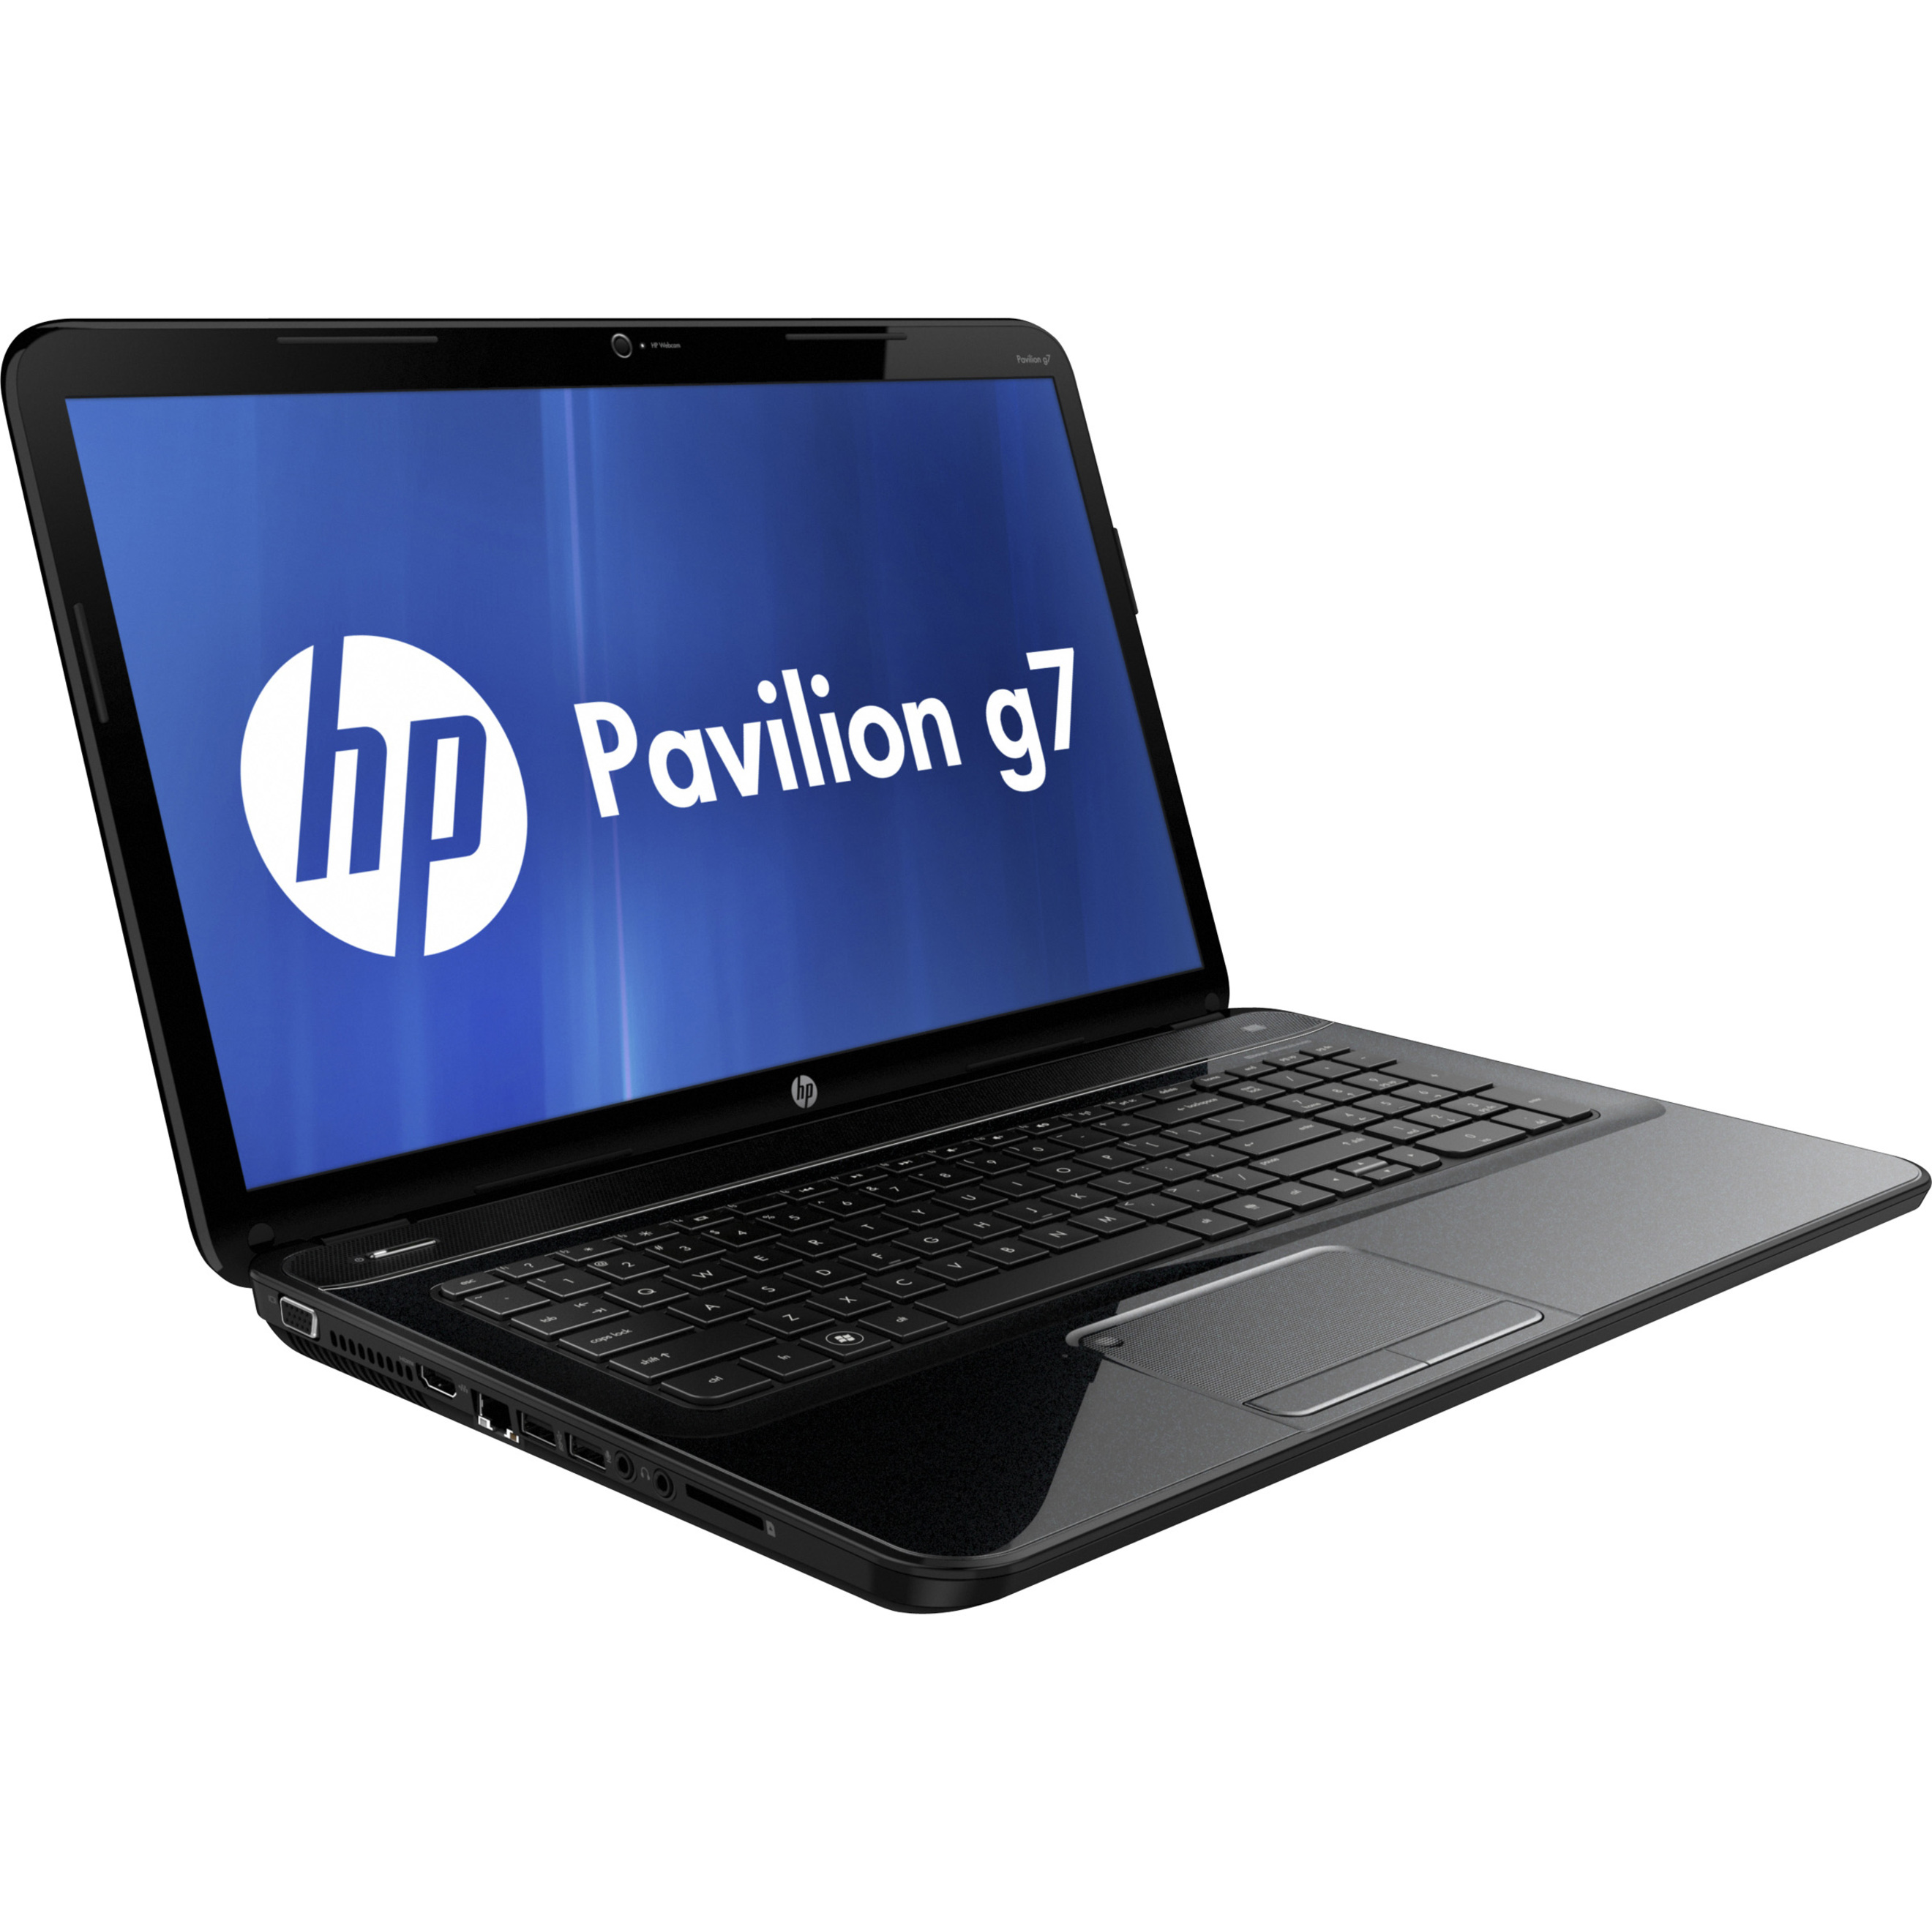 HP Pavilion 17.3" Laptop, AMD A-Series A8-4500M, 500GB HD, DVD Writer, Windows 8, g7-2269wm - image 4 of 6